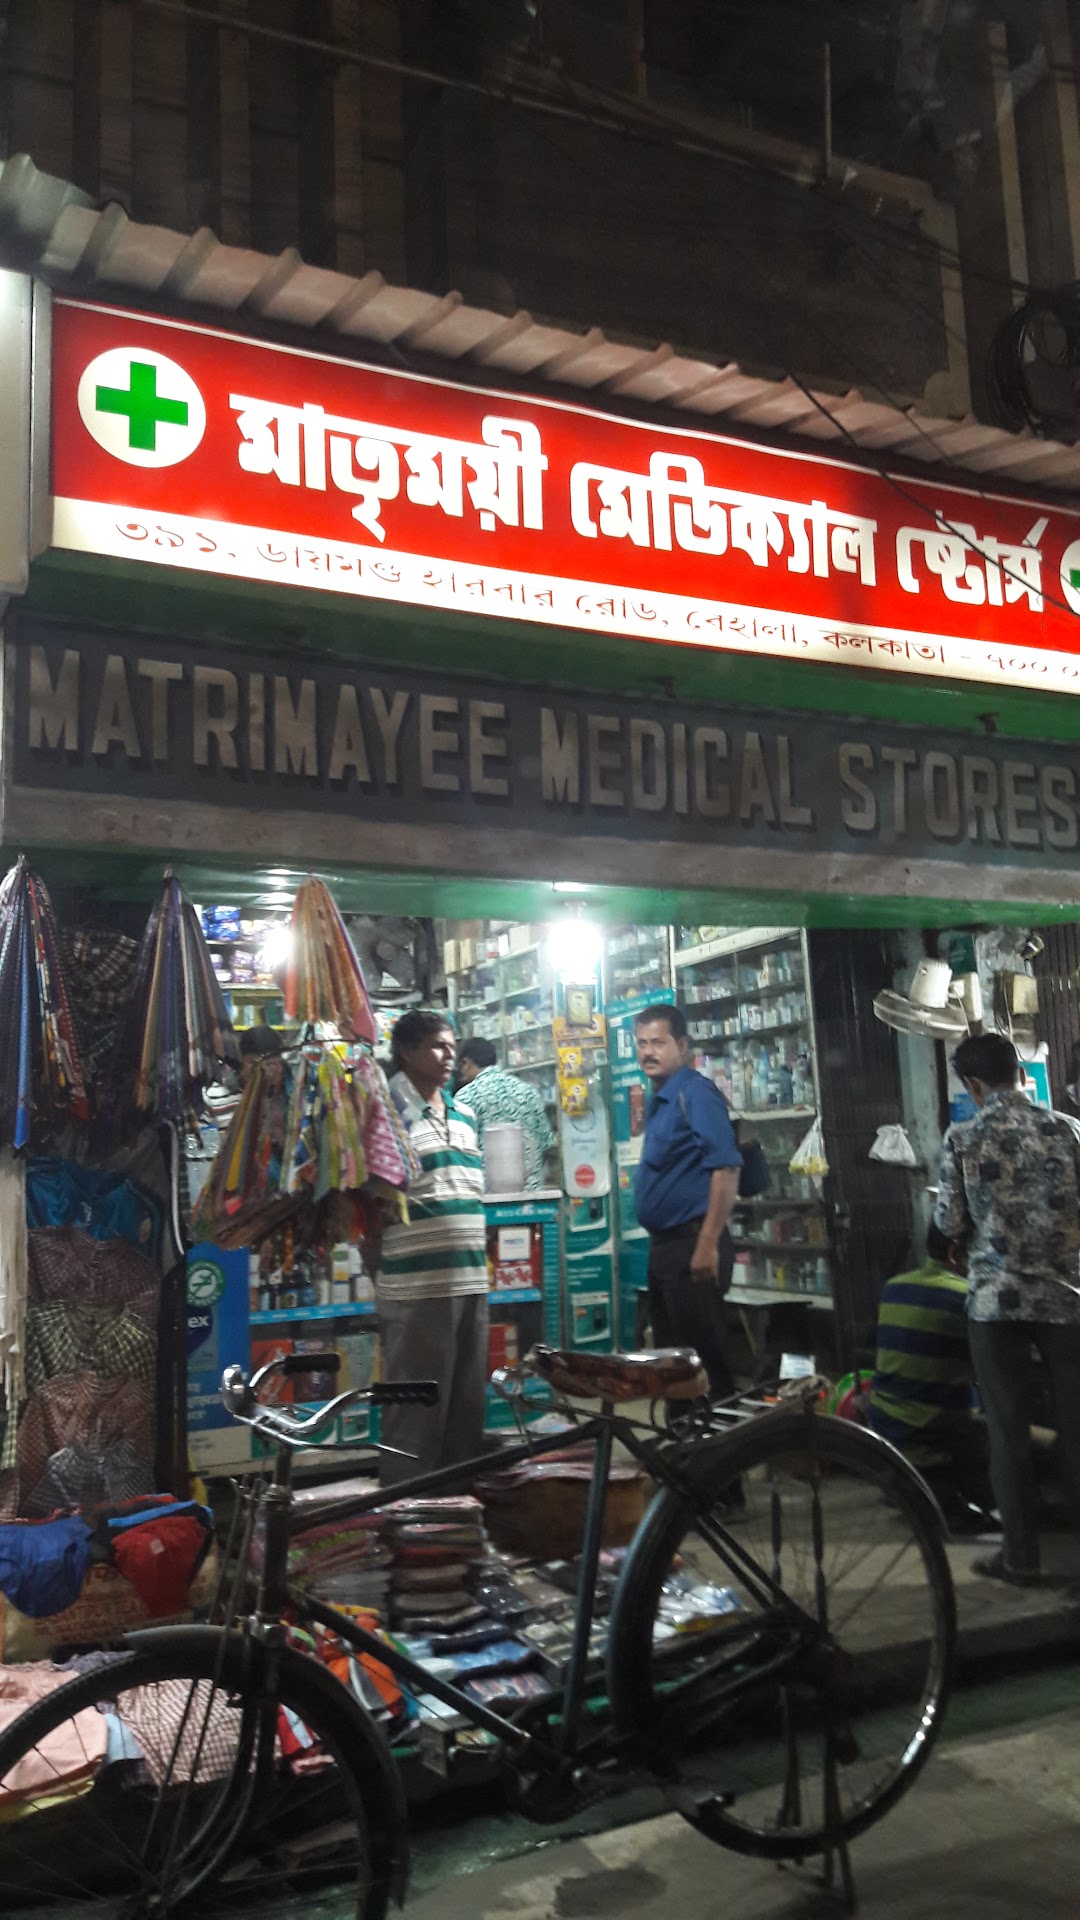 Matrimayee Medical Stores